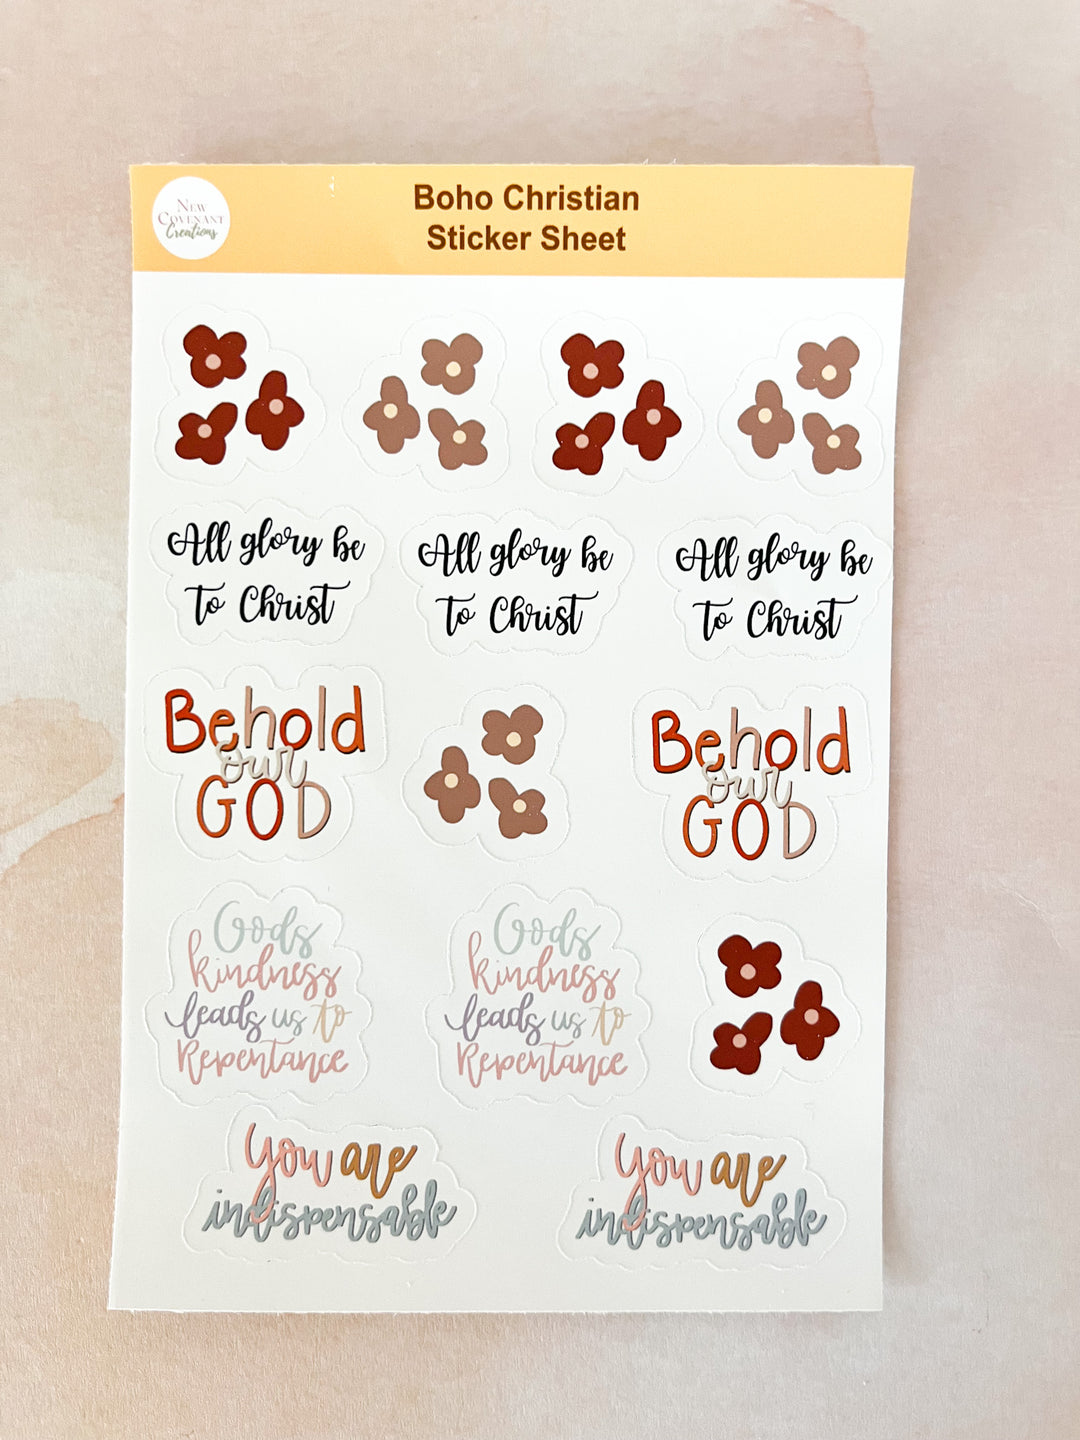 Boho Christian Sticker Sheets